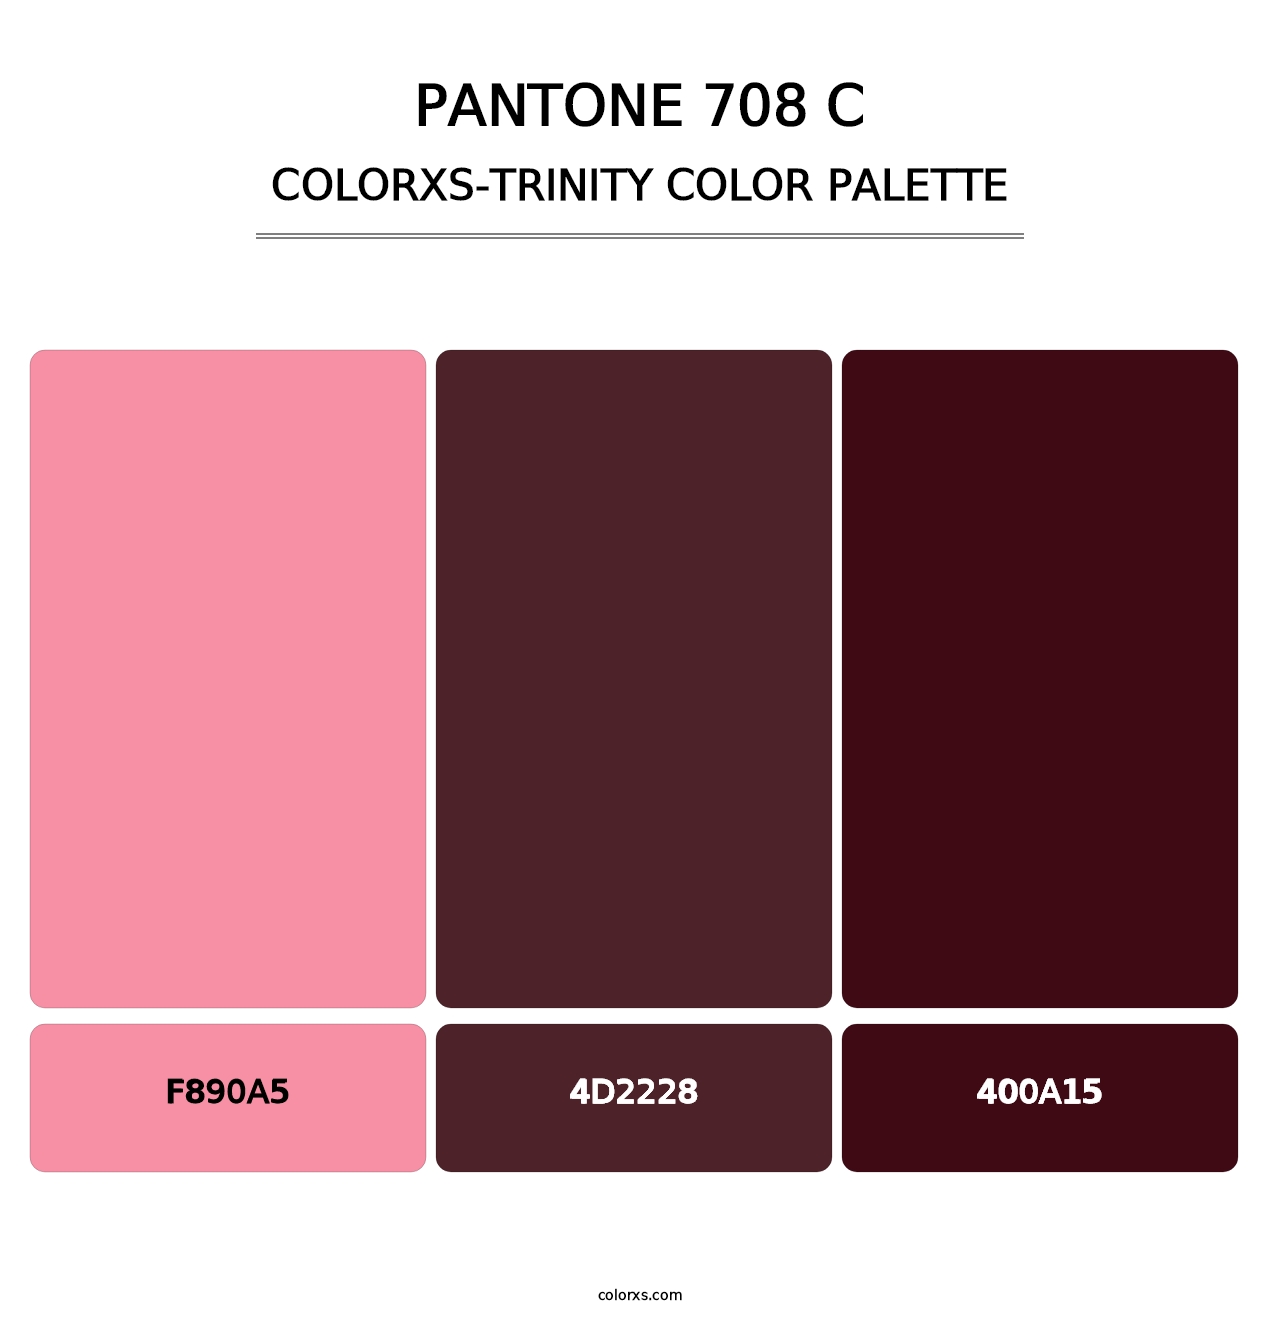 PANTONE 708 C - Colorxs Trinity Palette